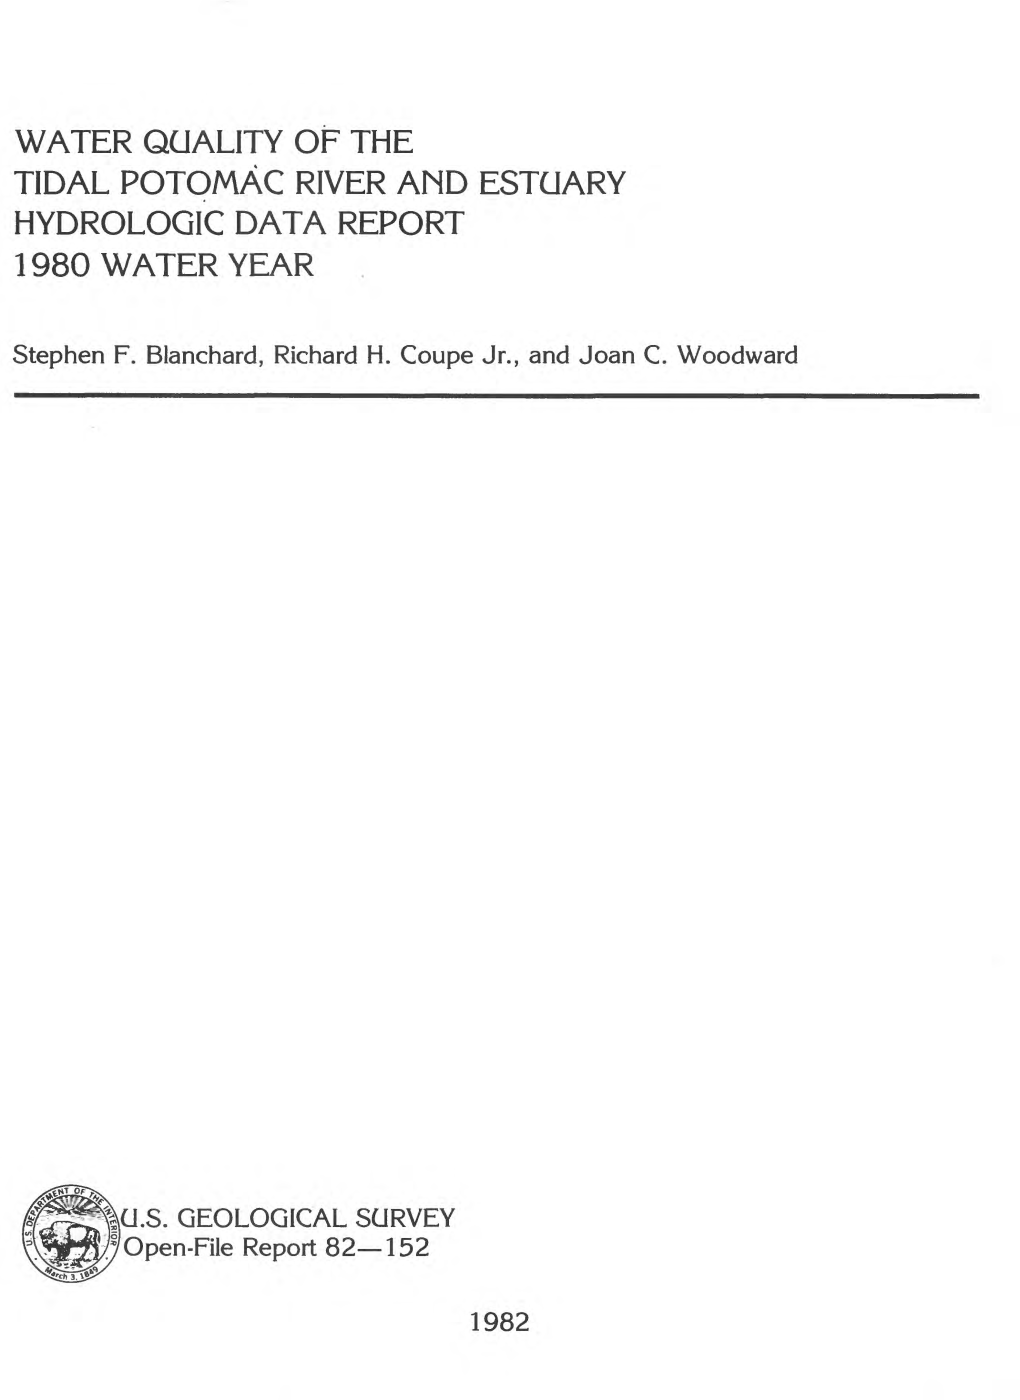 Tidal Potomac River and Estuary Hydrologic Data Report 1980 Water Year